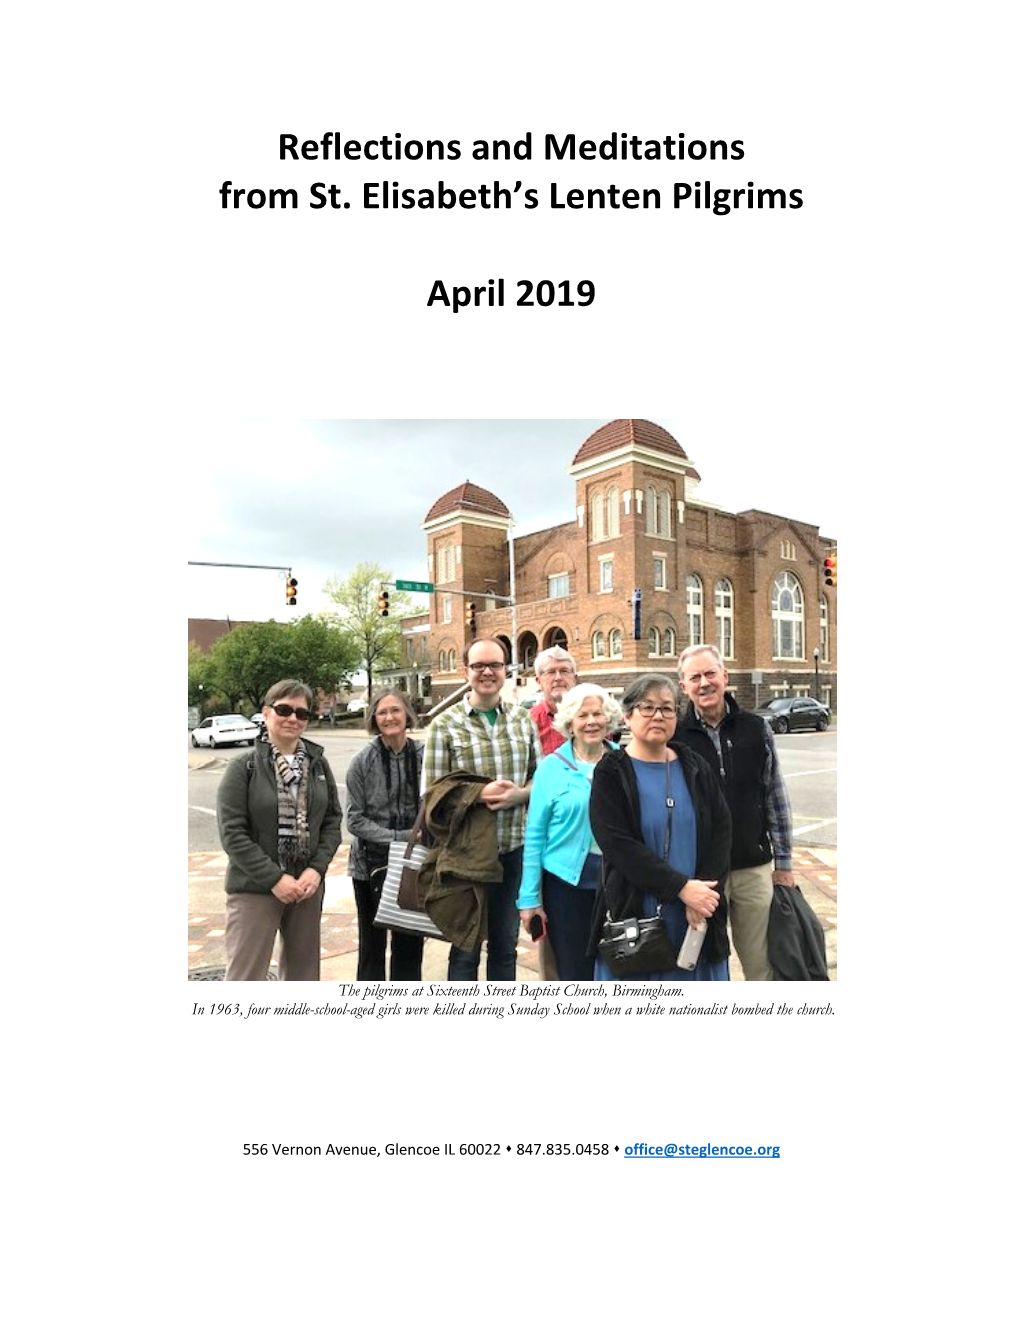 Reflections and Meditations from St. Elisabeth's Lenten Pilgrims April 2019